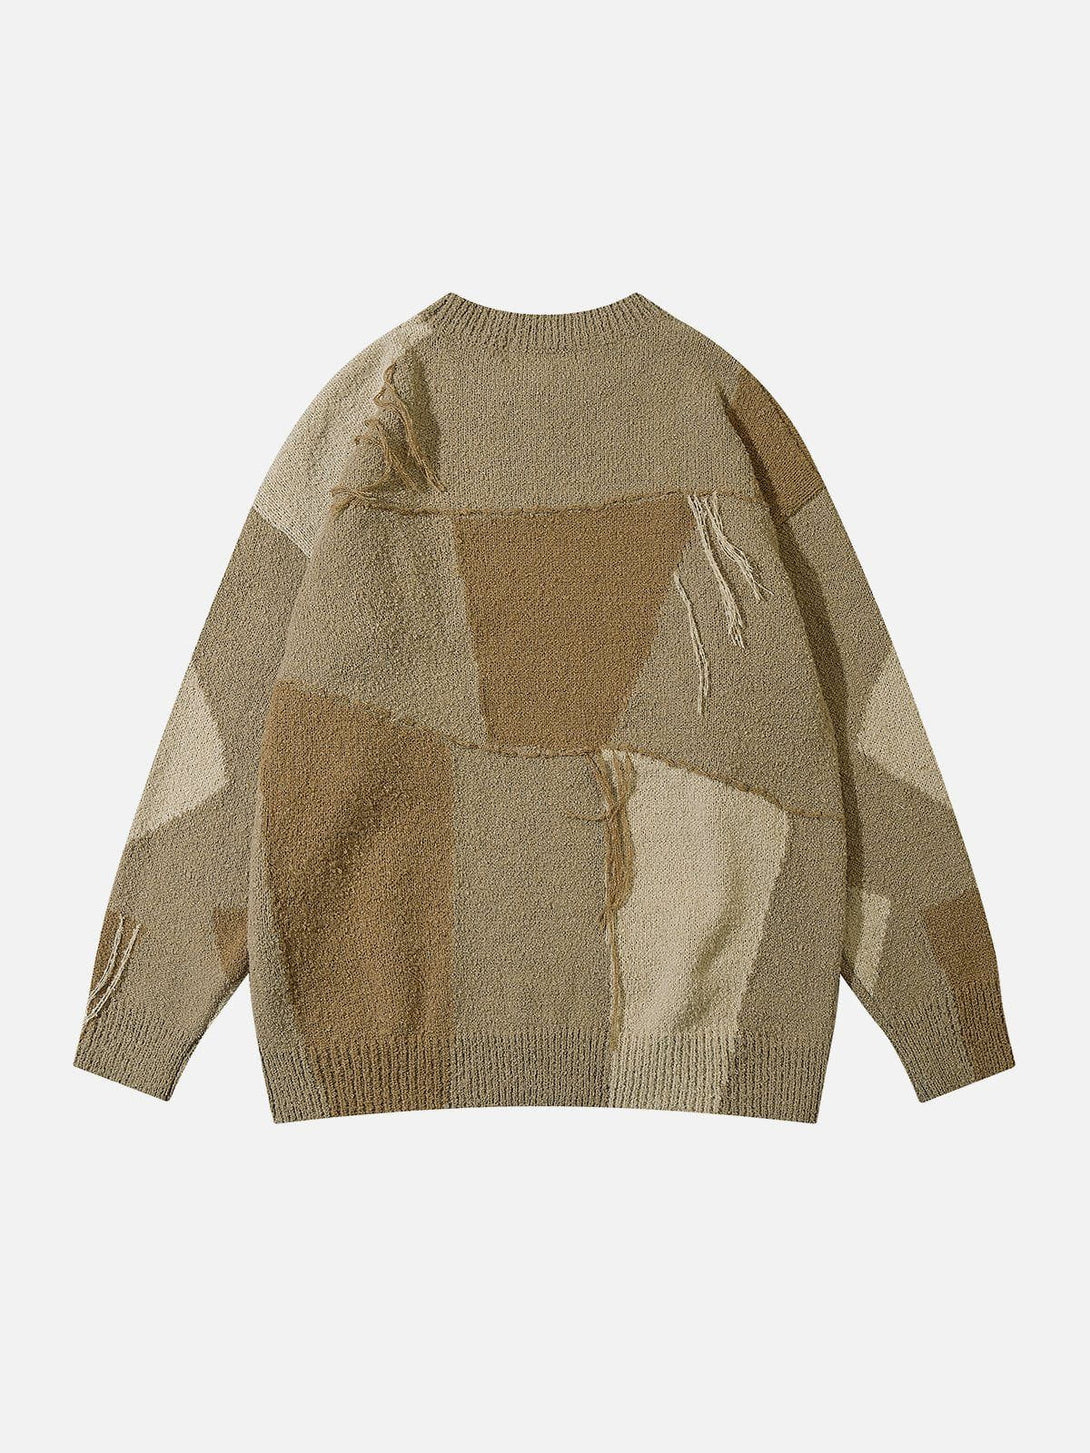 Majesda® - Irregular Colorblock Fringe Sweater outfit ideas streetwear fashion